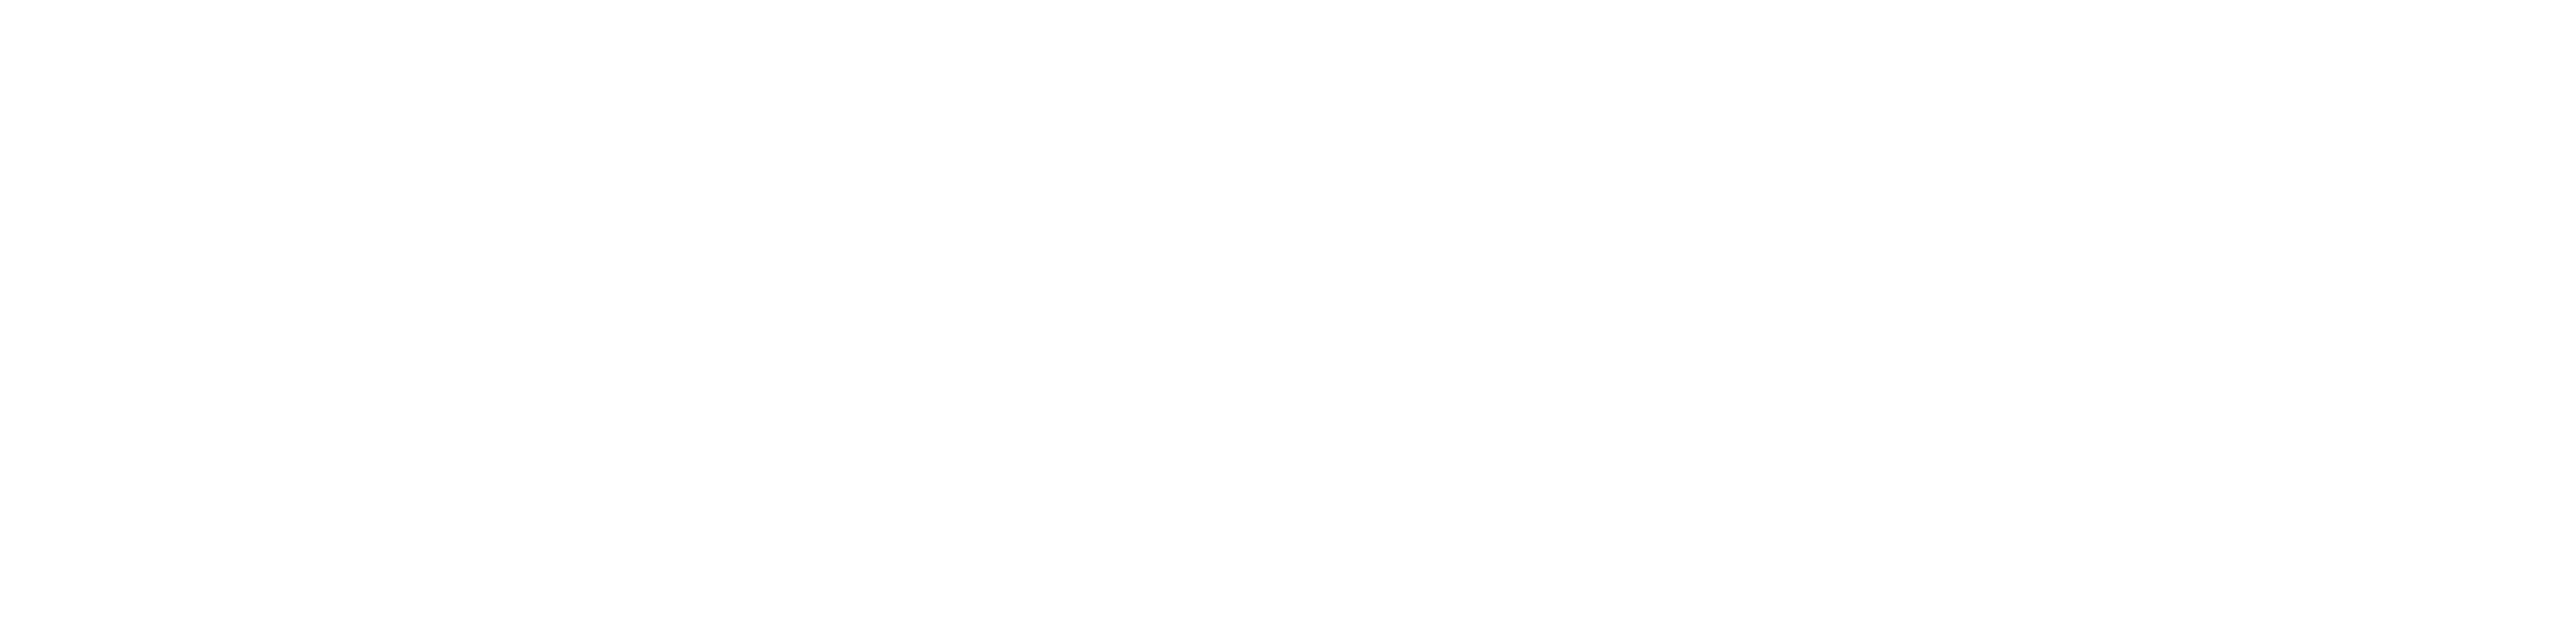 ascendex logo